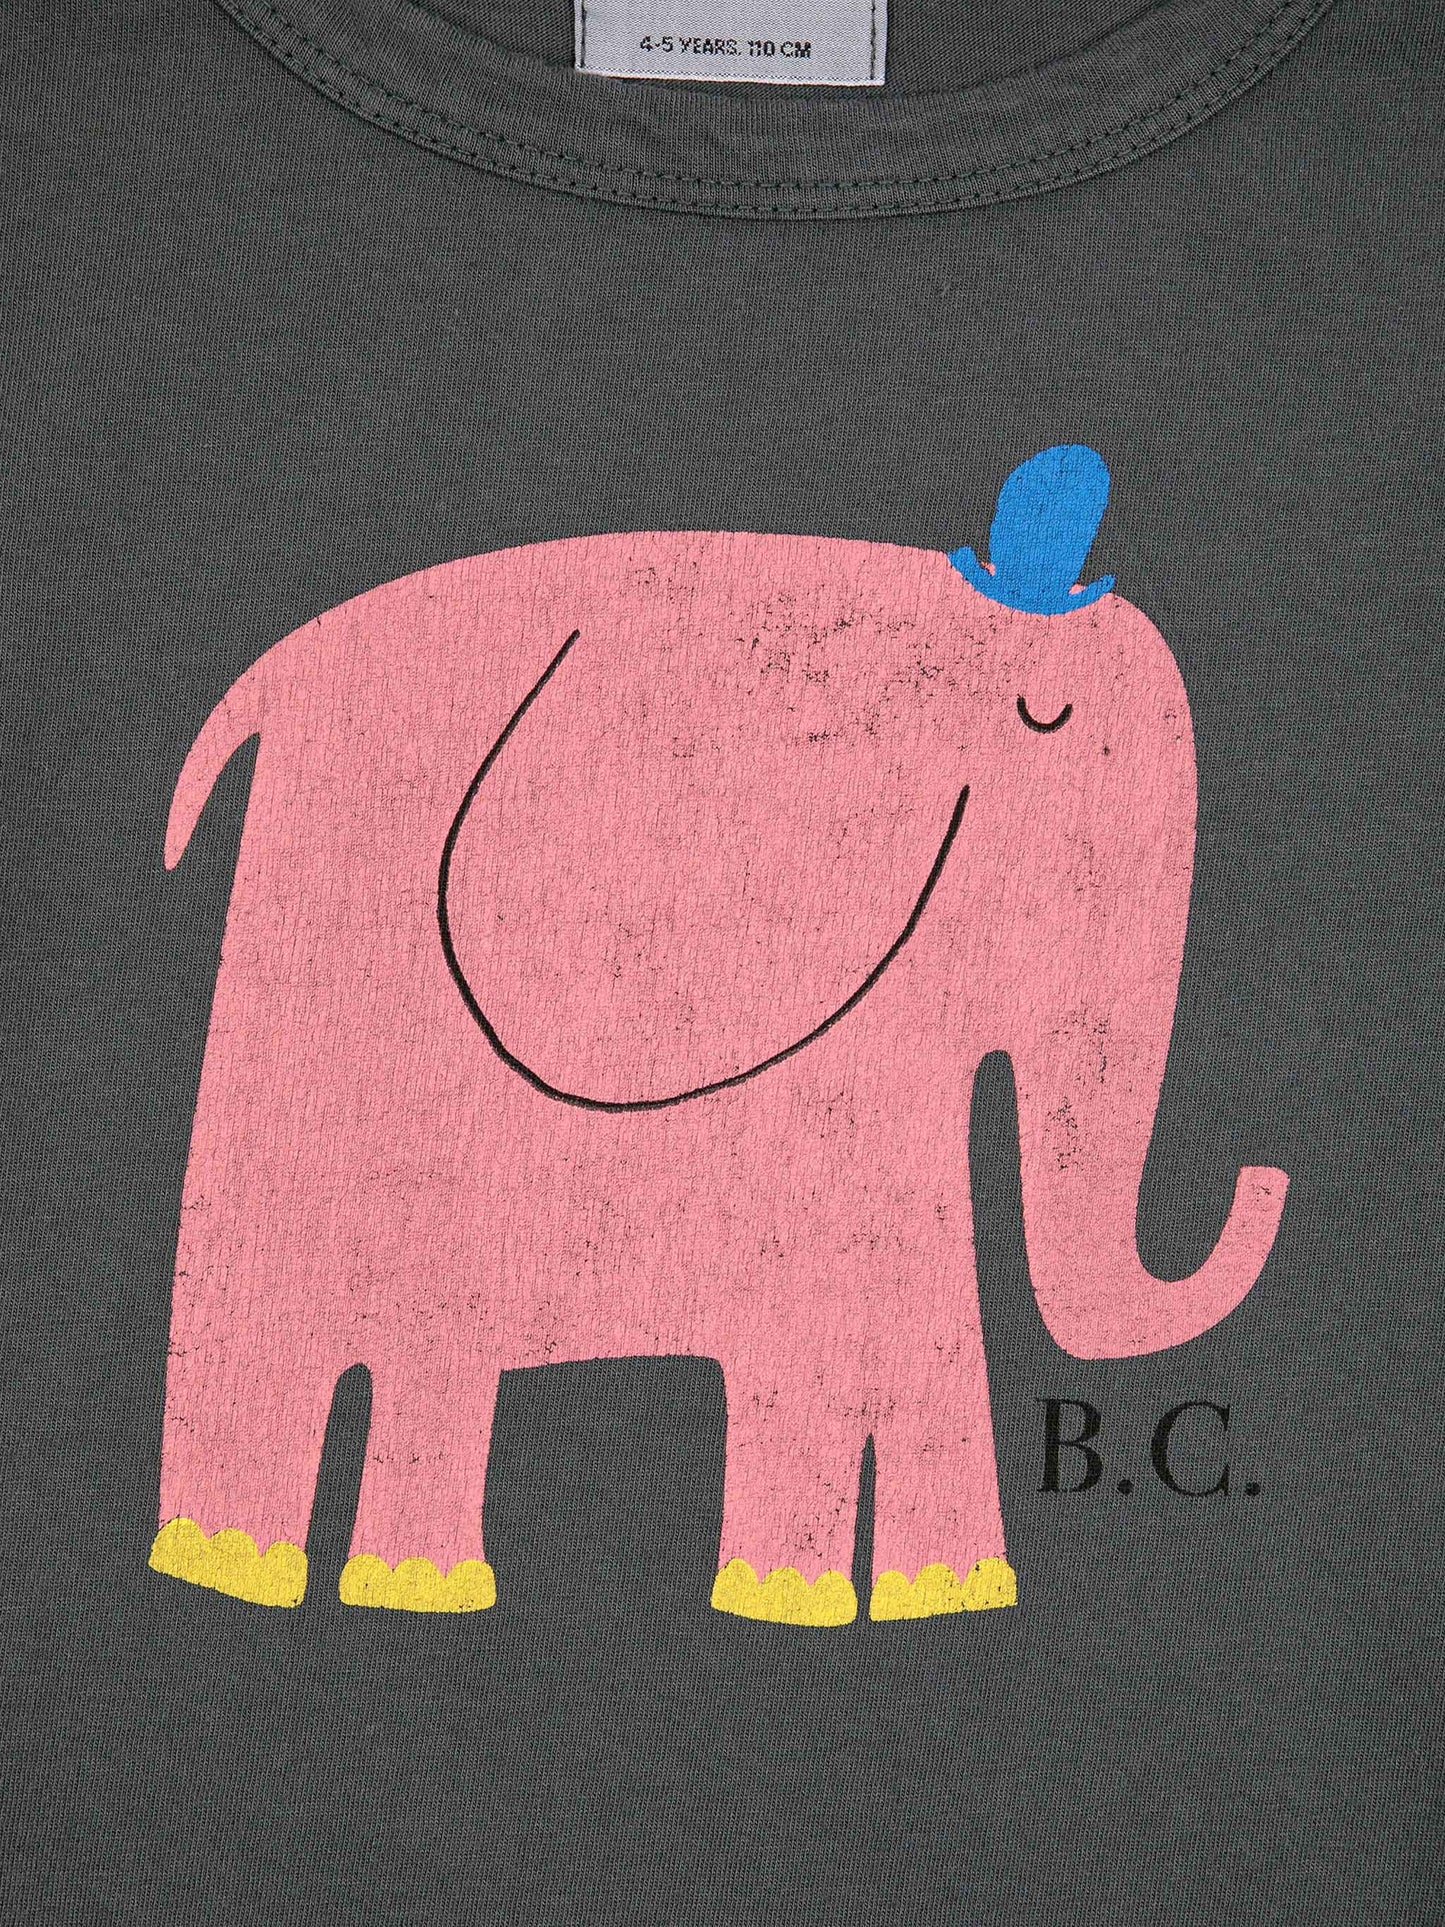 The Elephant T-shirt